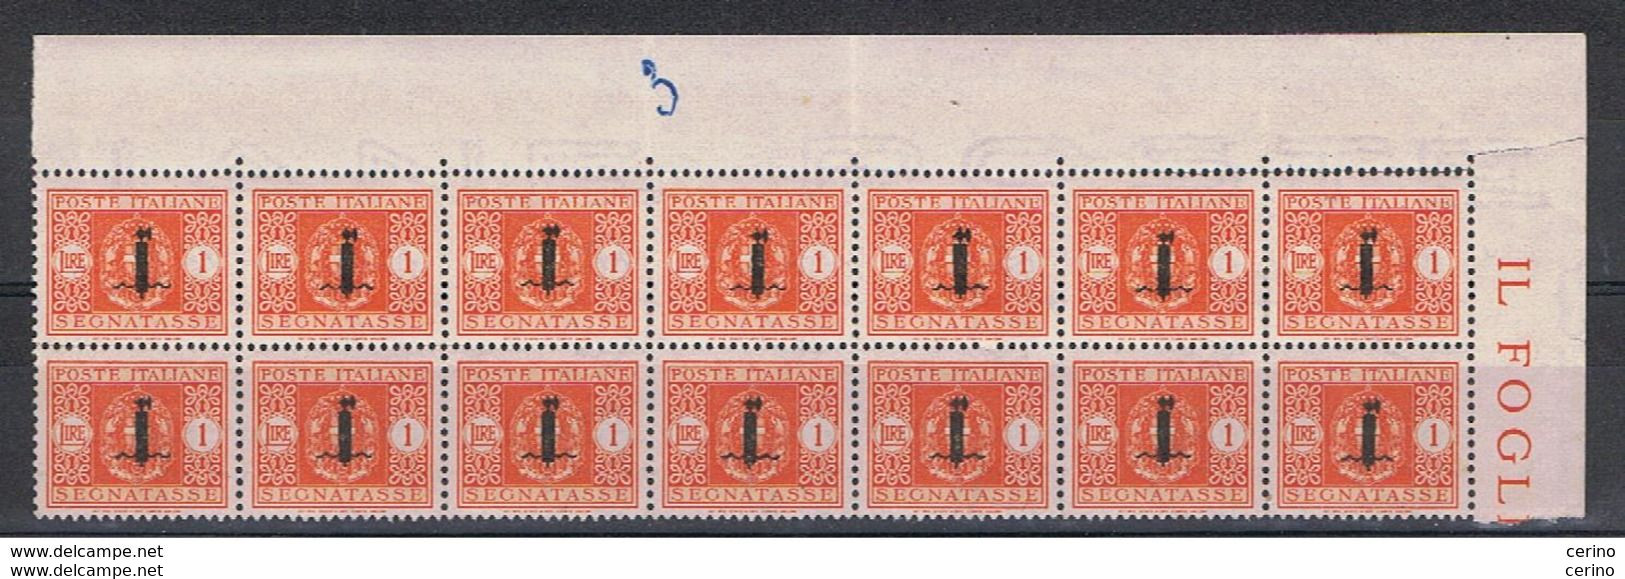 R.S.I.:  1944  TASSE  - £. 1  ARANCIO  BL. 14  N. -  DENTELLATURA  APERTA  IN  ALTO  A  DX. -   SASS. 68 - Impuestos